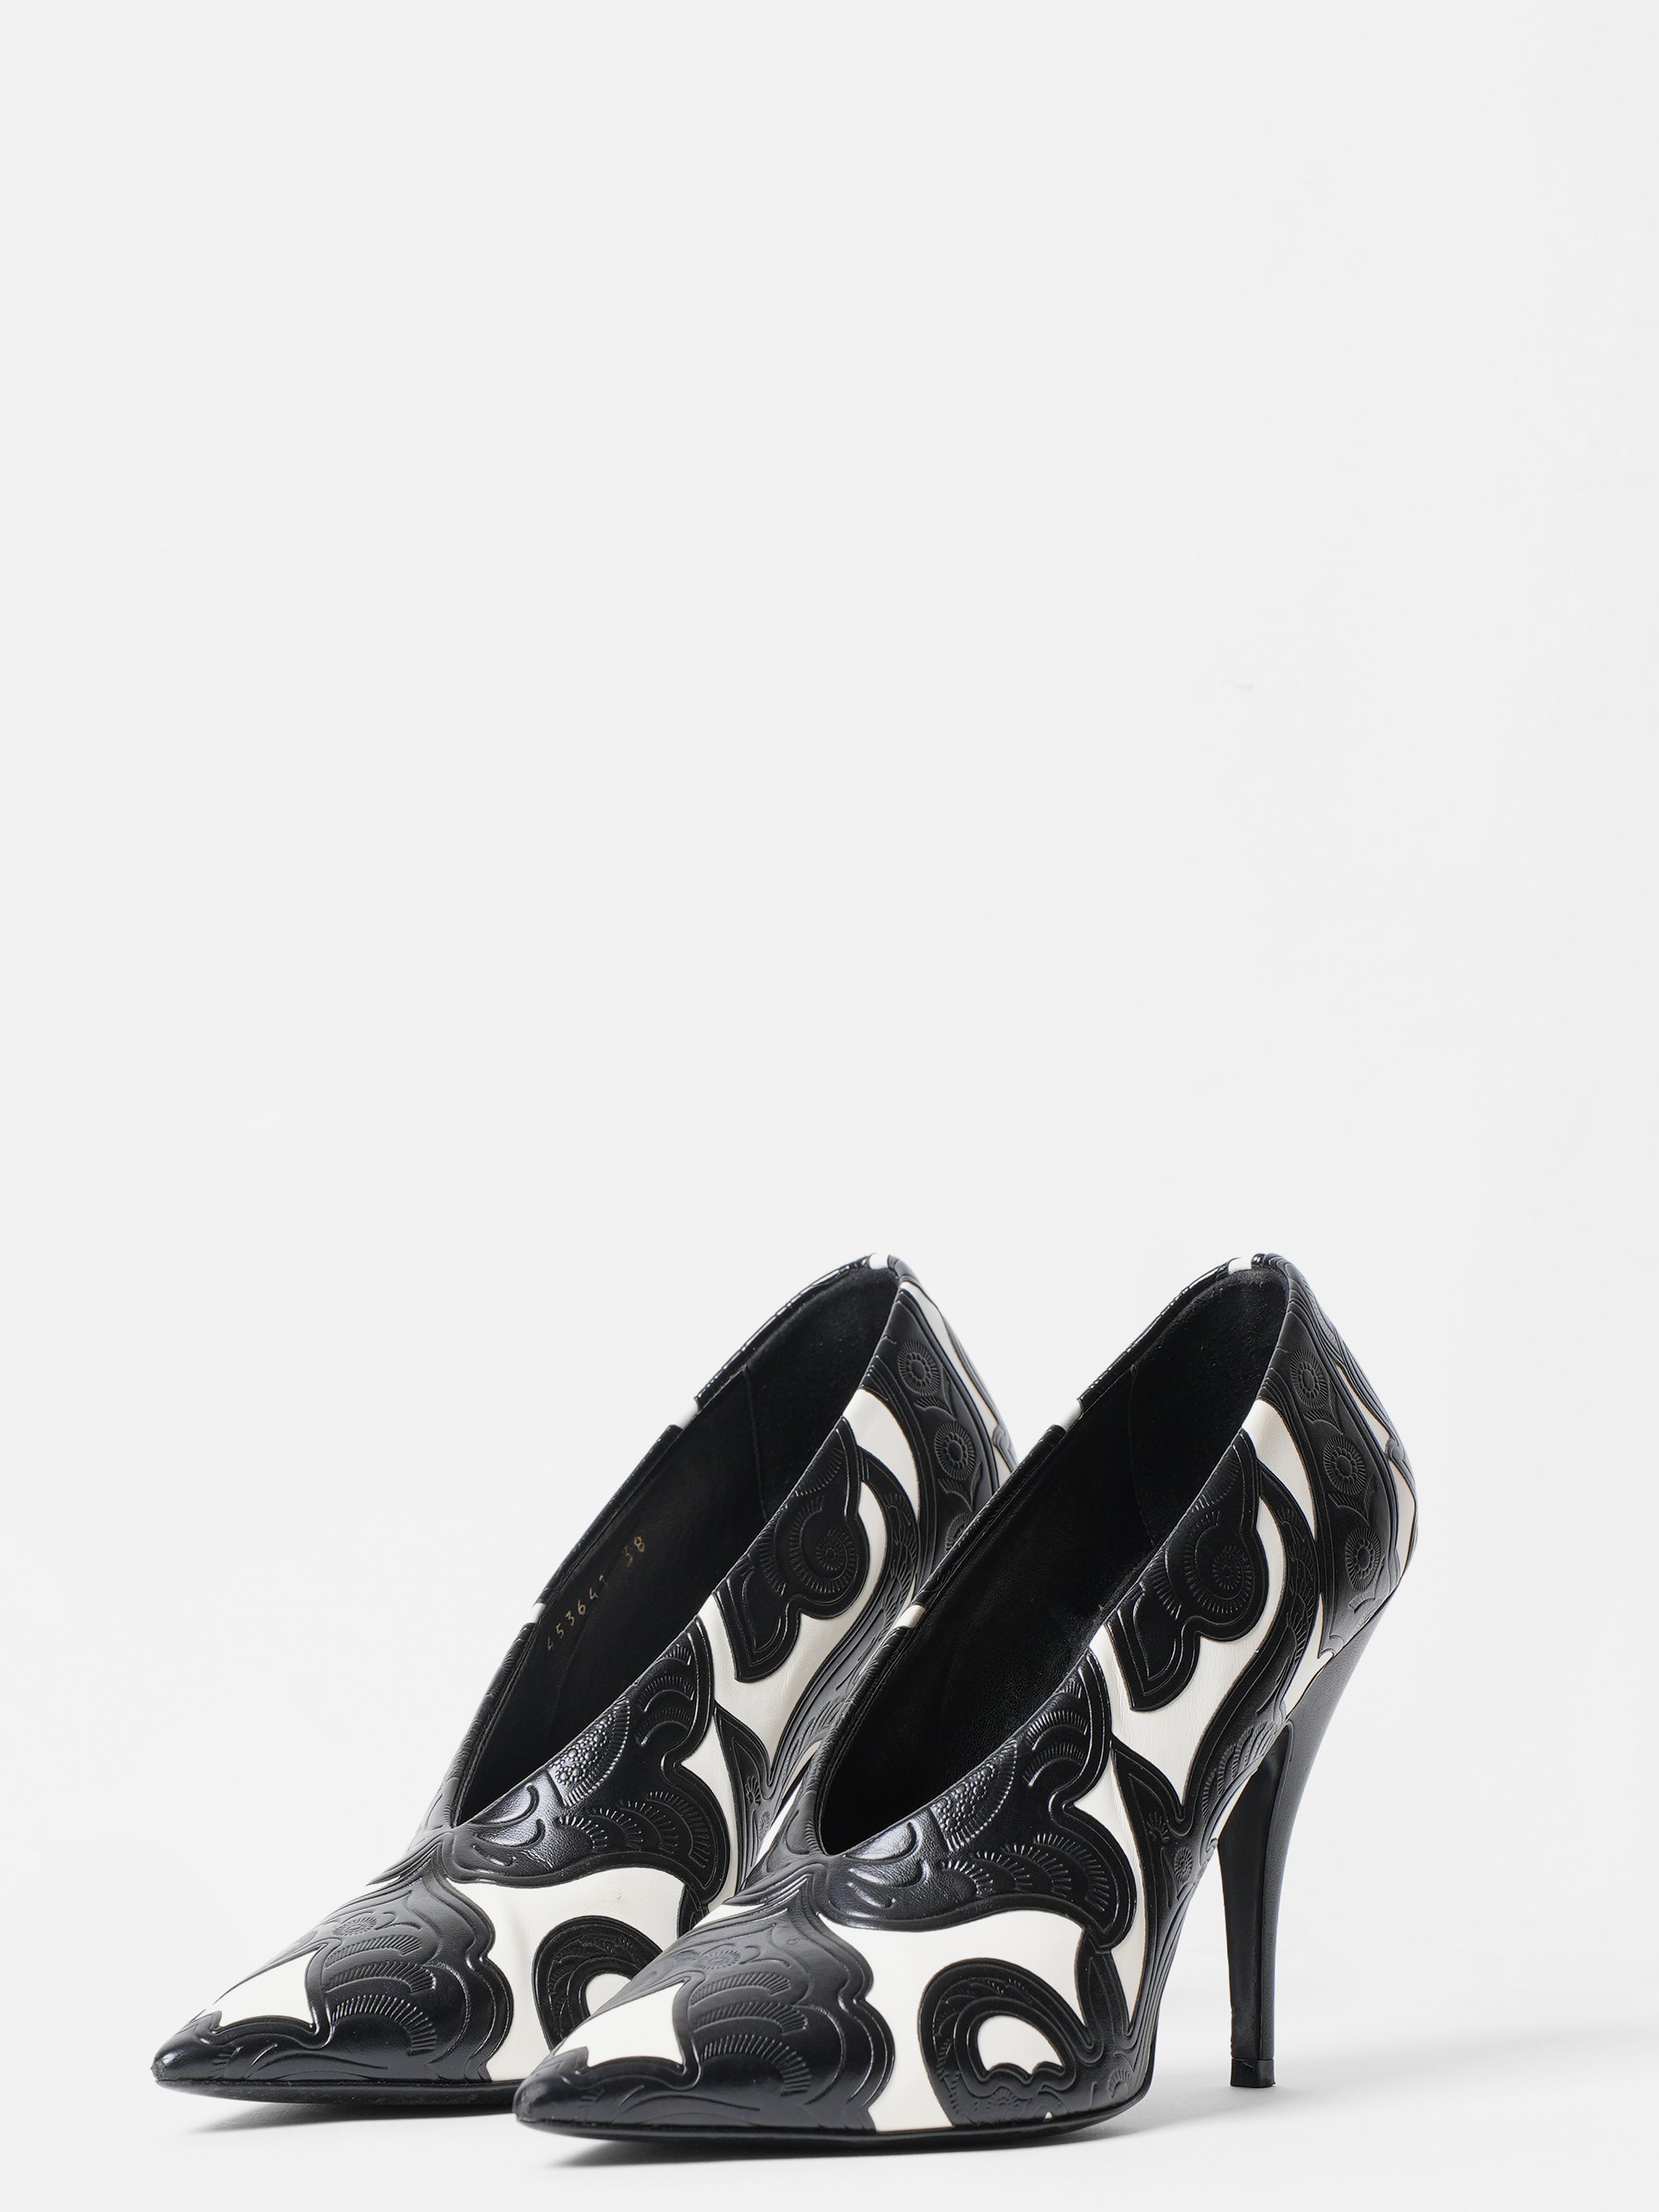 Stella McCartney Black & White Stilettos